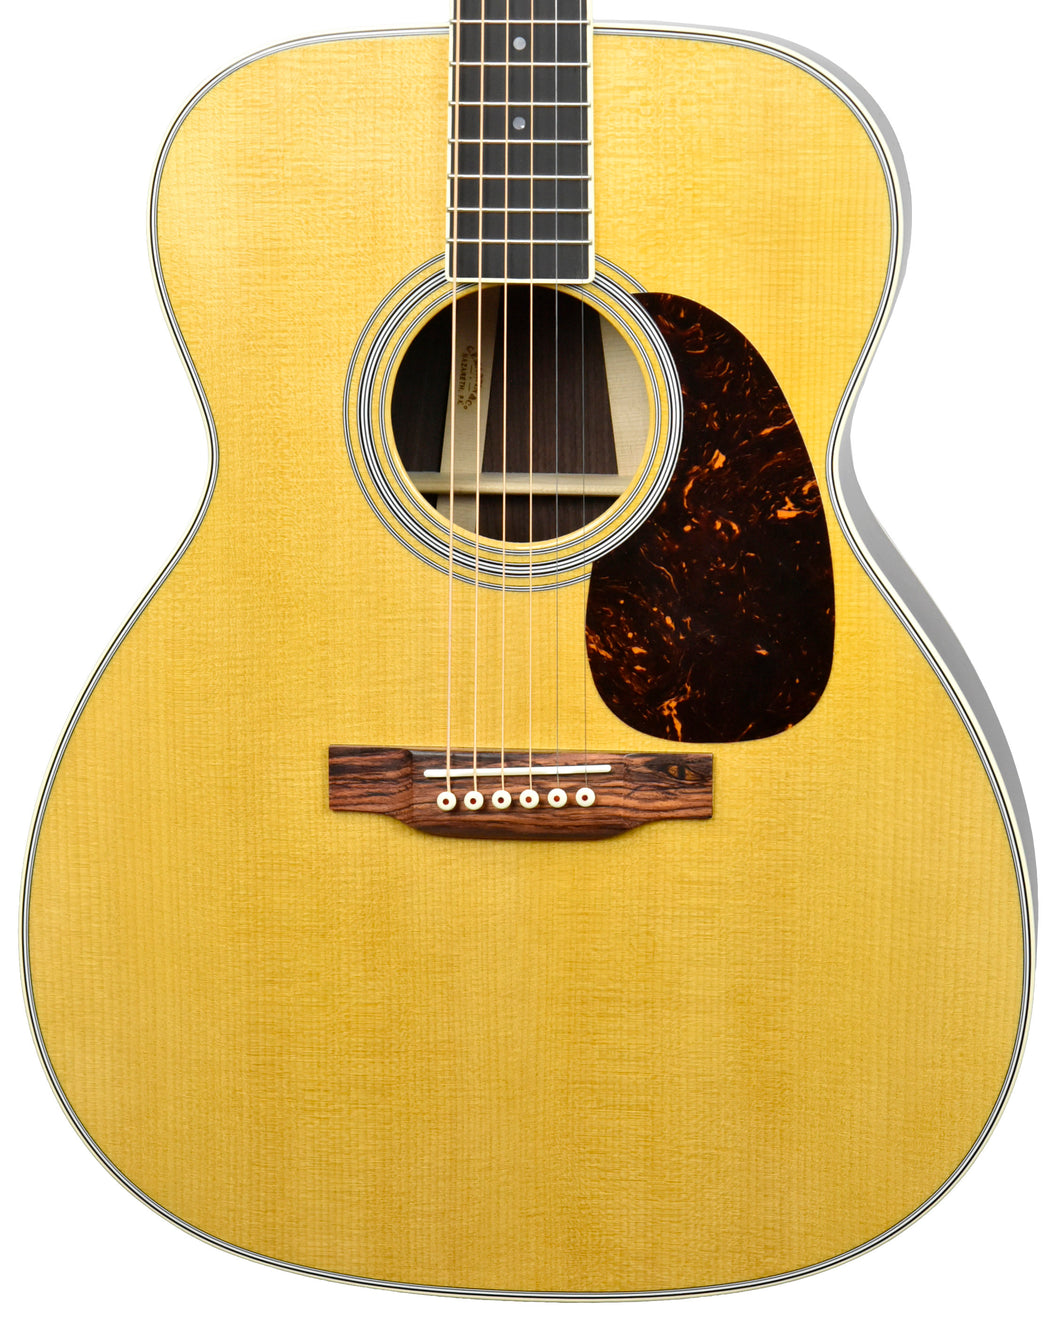 Martin M-36 Acoustic Guitar in Natural 2560025